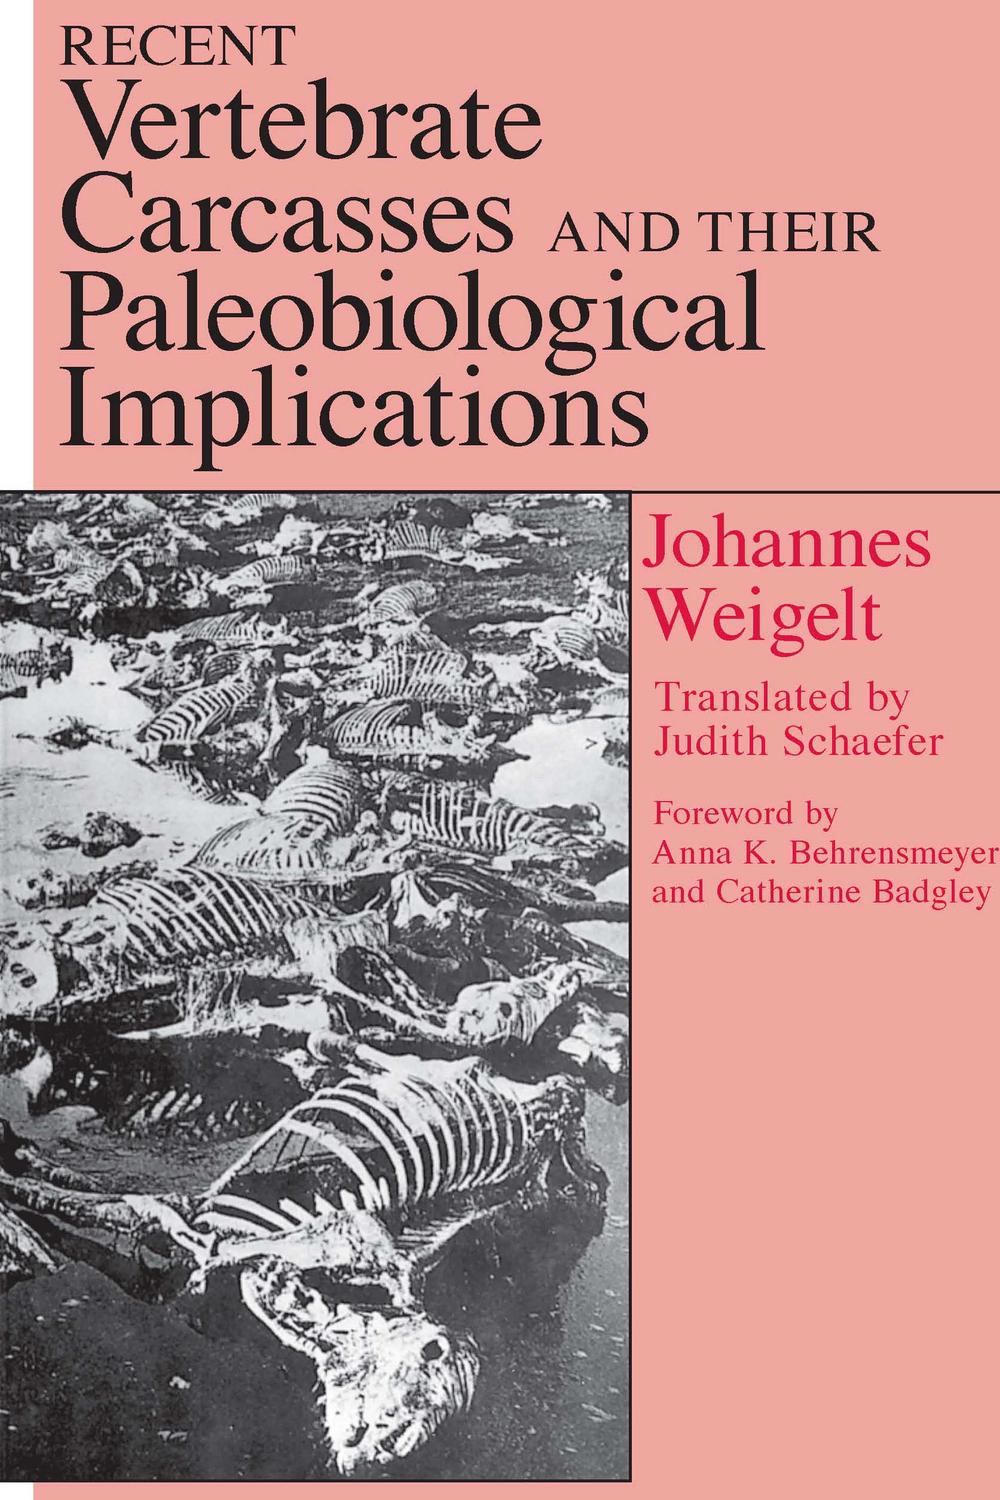 Recent Vertebrate Carcasses and Their Paleobiological Implications - Johannes Weigelt, Judith Schaefer